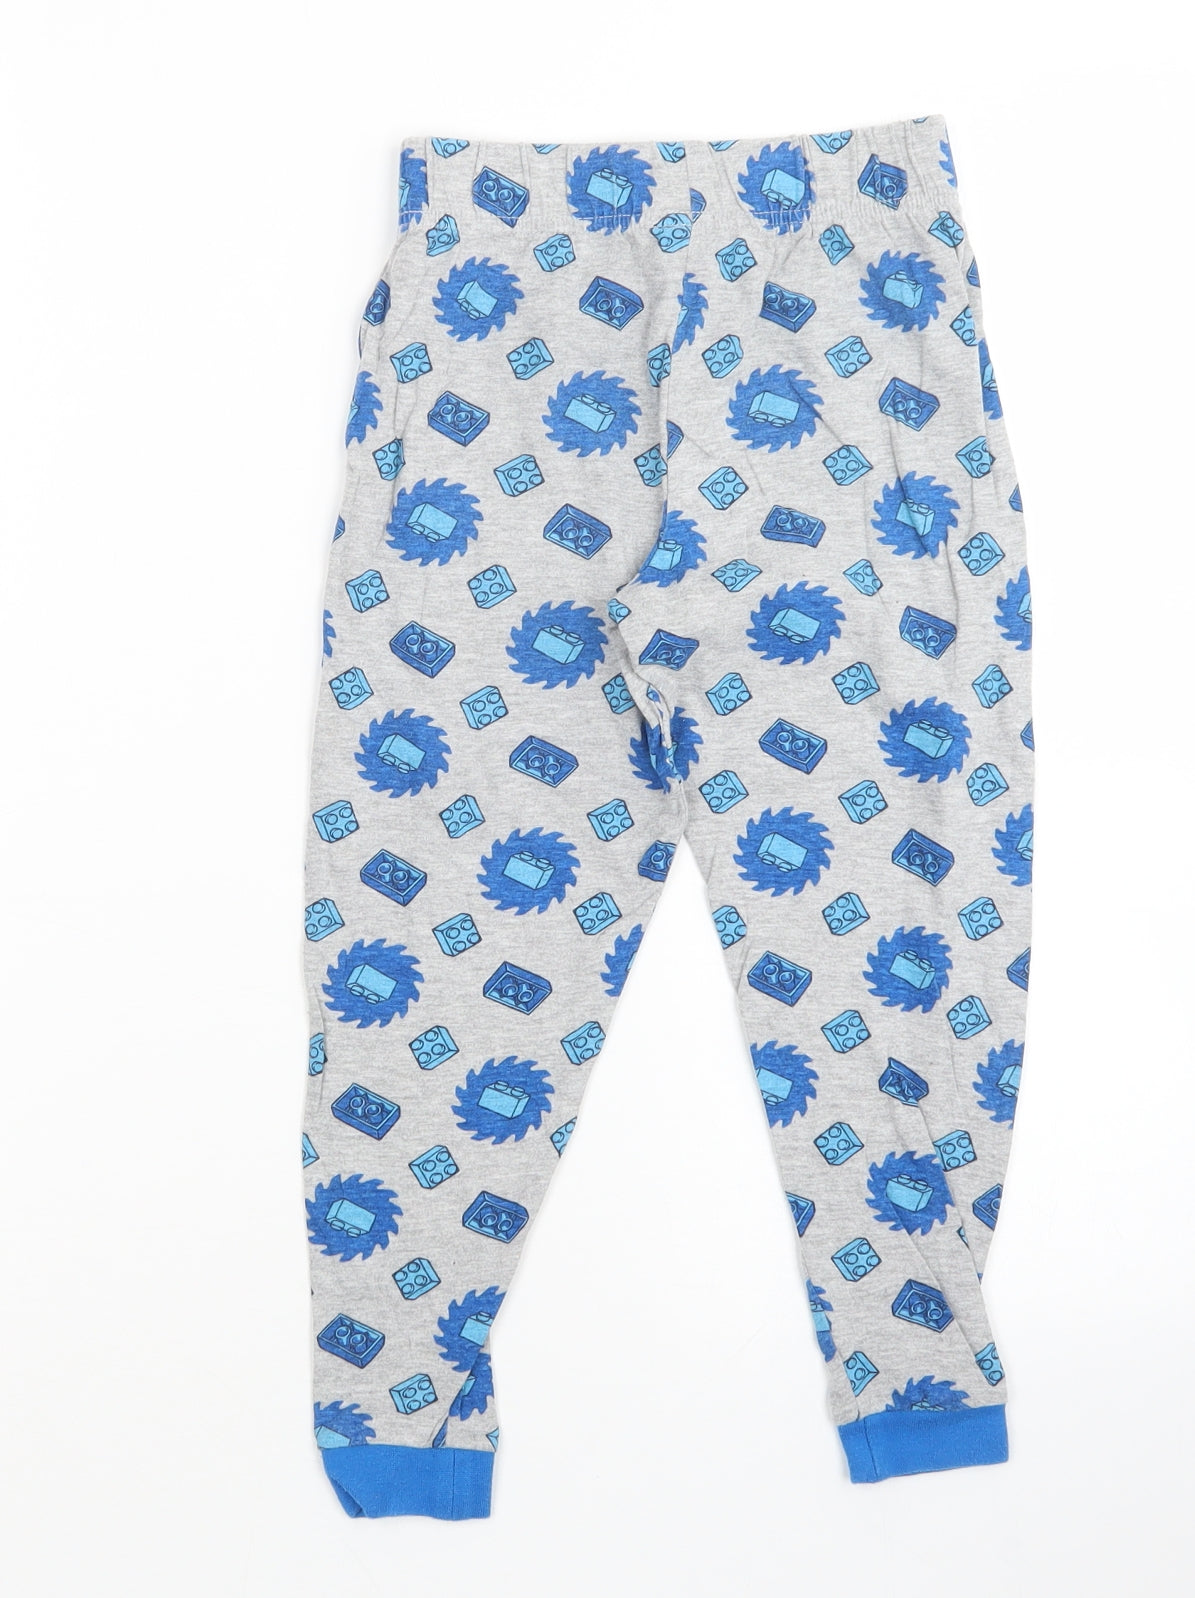 Primark Boys Multicoloured    Pyjama Pants Size 4-5 Years  - lego